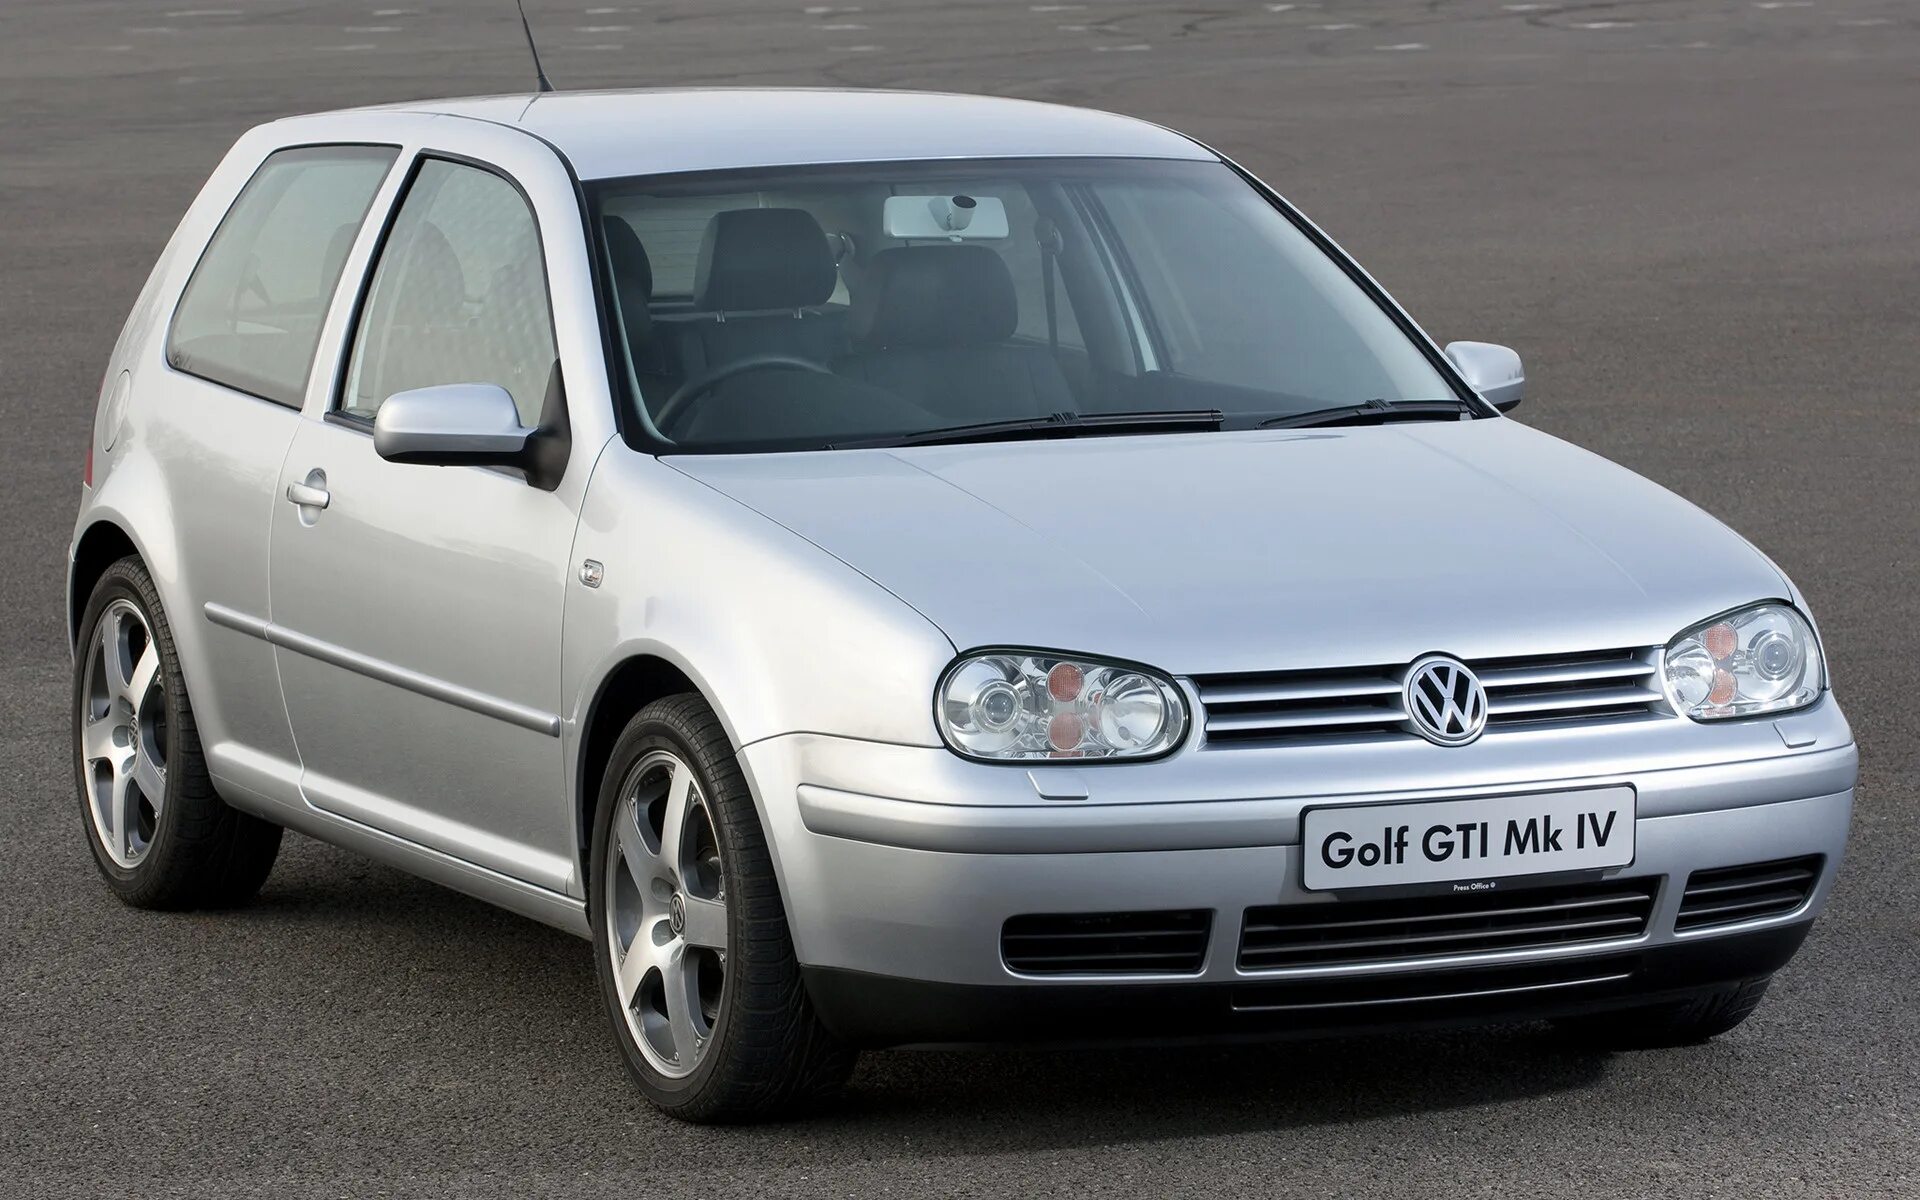 Volkswagen Golf 4 GTI. Volkswagen Golf GTI 2001. VW Golf mk4. Volkswagen гольф 4 1998 года.